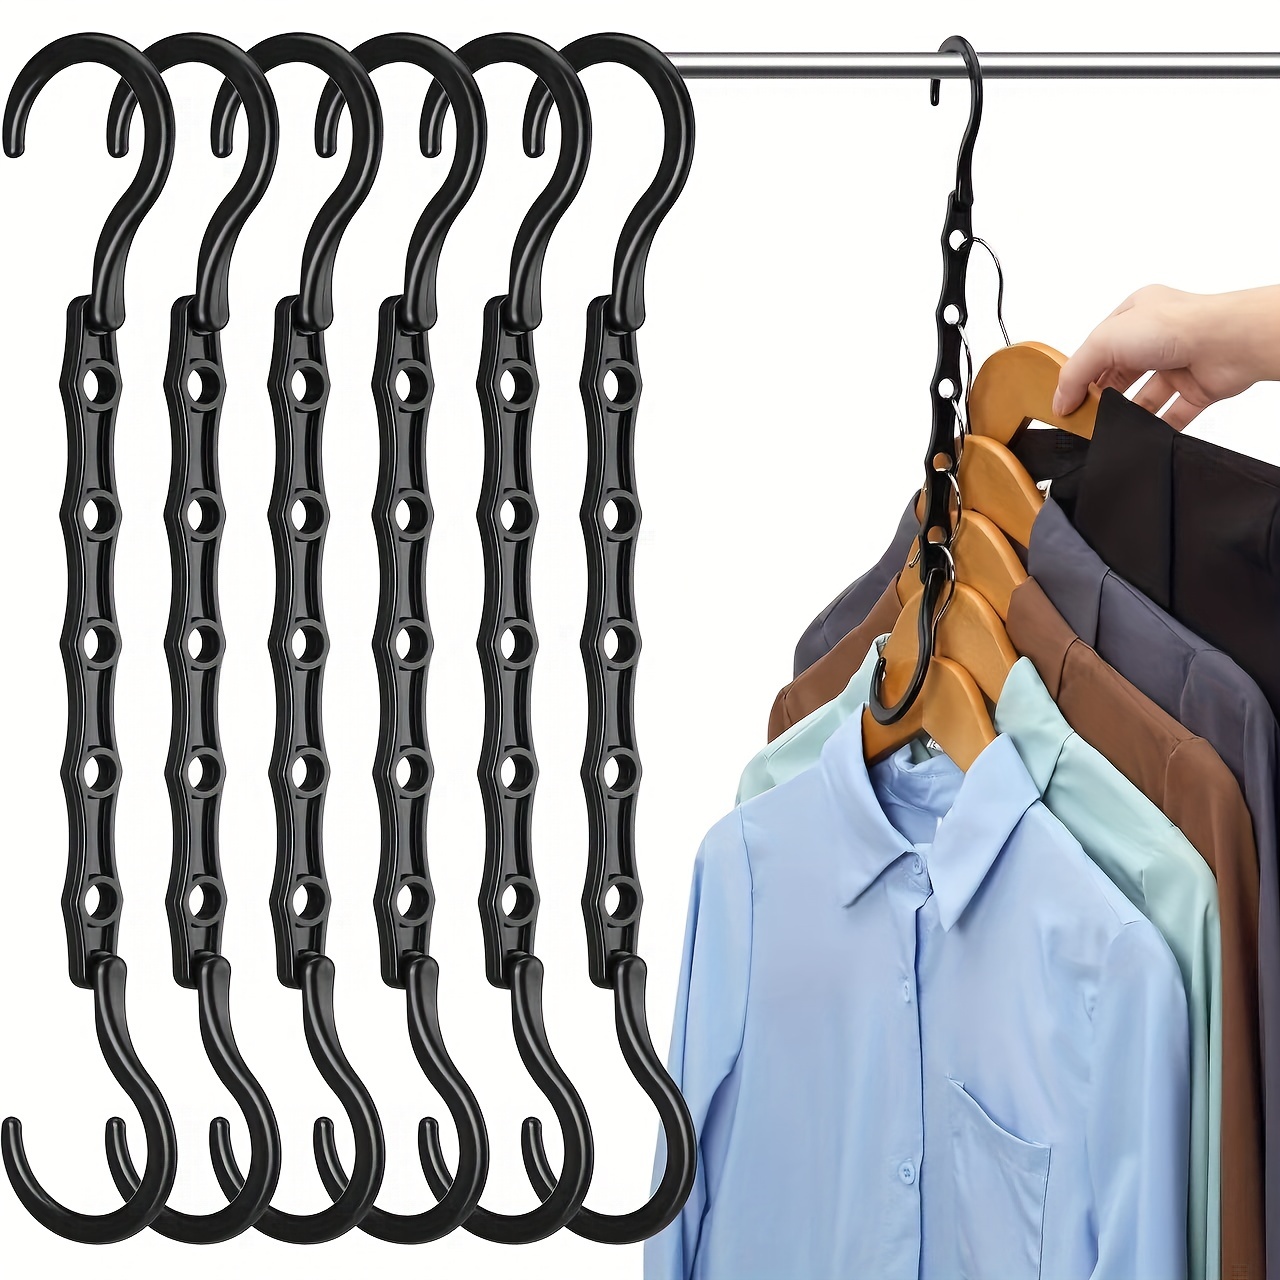 Clothes Hanger Connector Hooks Magic Hanger Hooks Heavy - Temu